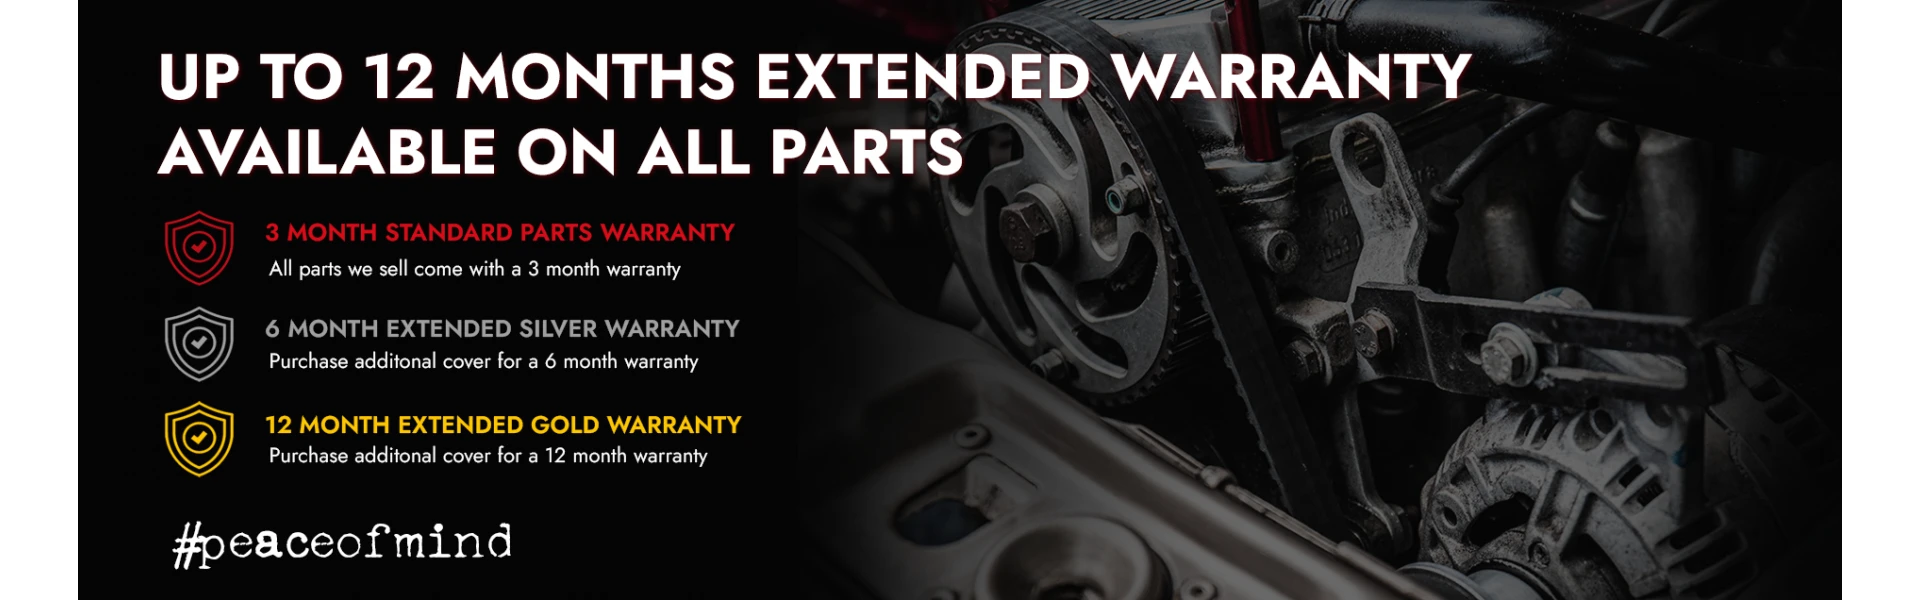 Warranty on parts